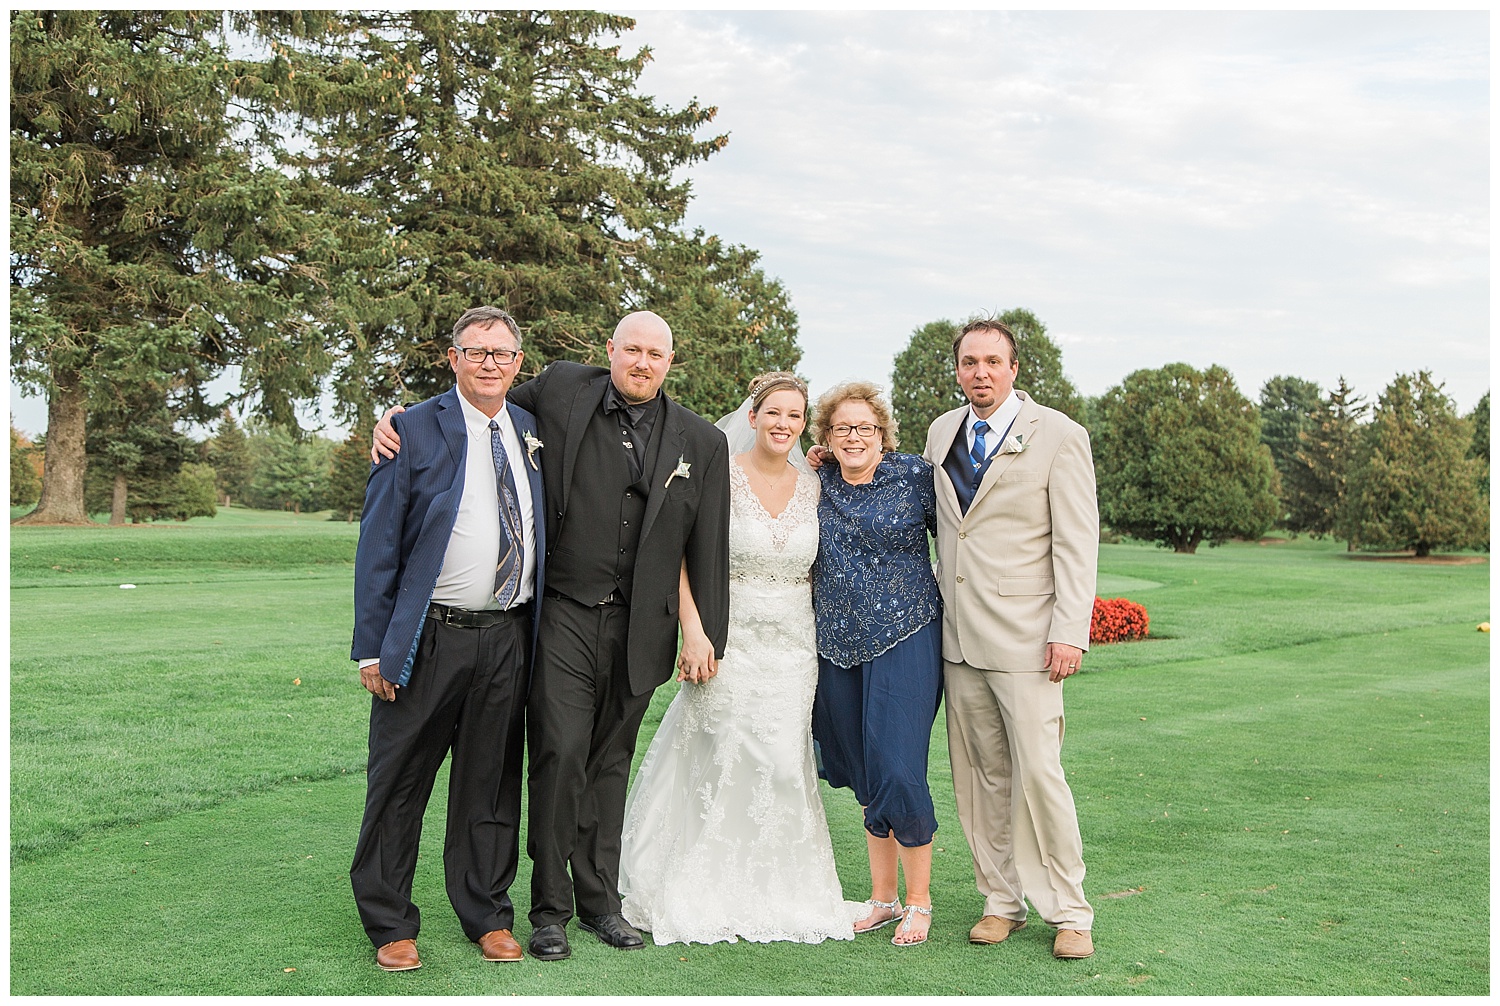 Jessica and Scott McKay - Terry Hills Golf Course - Batavia NY - Lass and Beau-834_Buffalo wedding photography.jpg